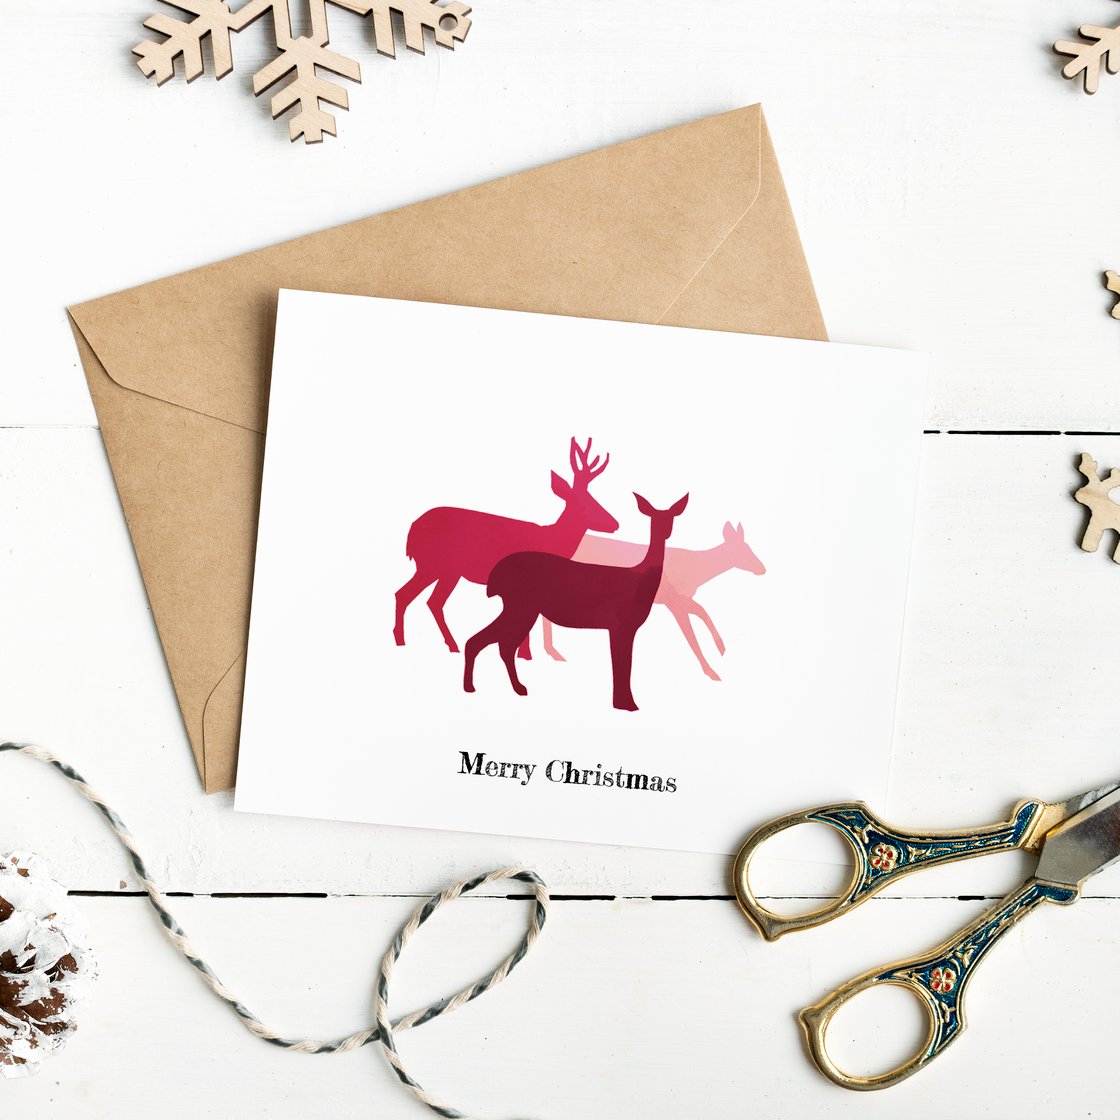 Image of Pack of 6 Deer Christmas Cards